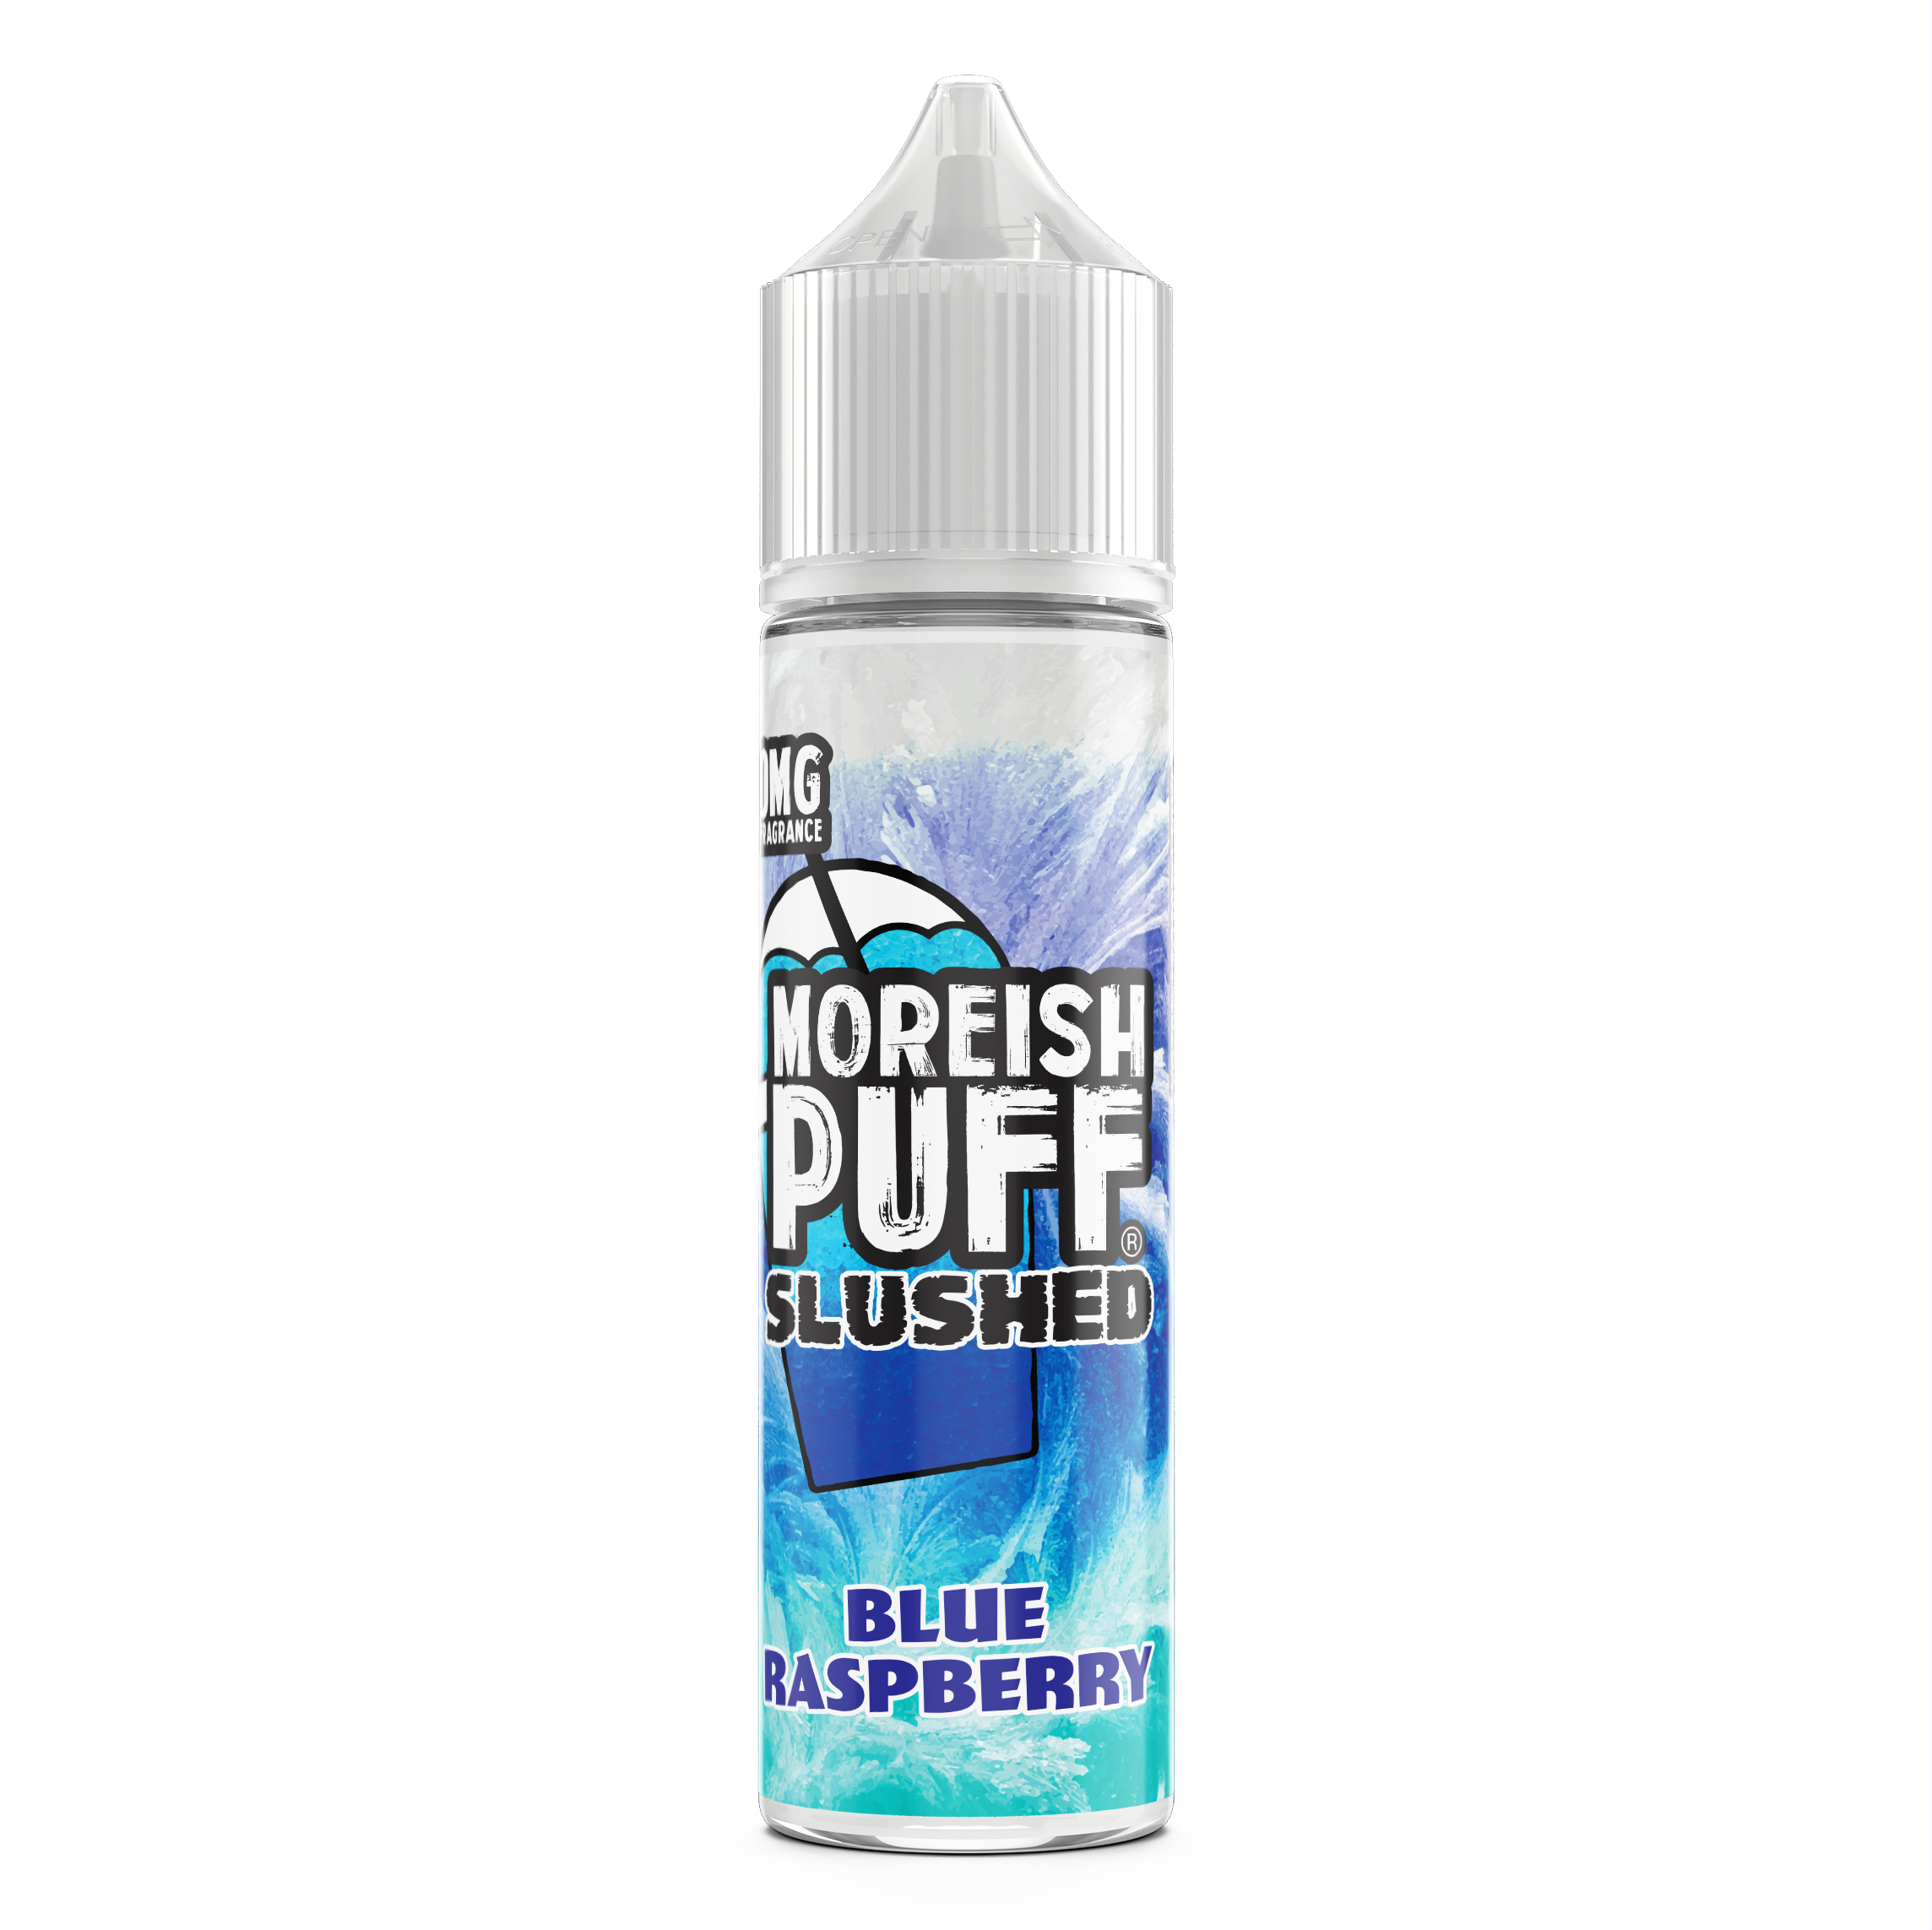 Moreish Puff Slushed Blue Raspberry 0mg 50ml Shortfill E-Liquid